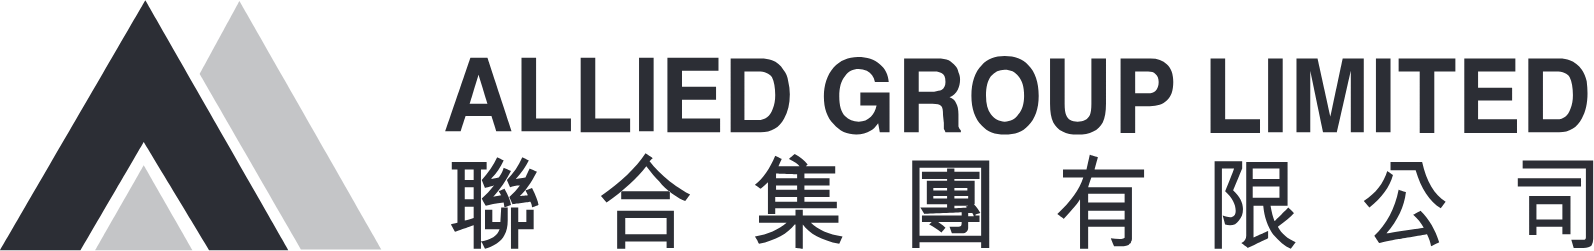 Allied Group Limited logo large (transparent PNG)